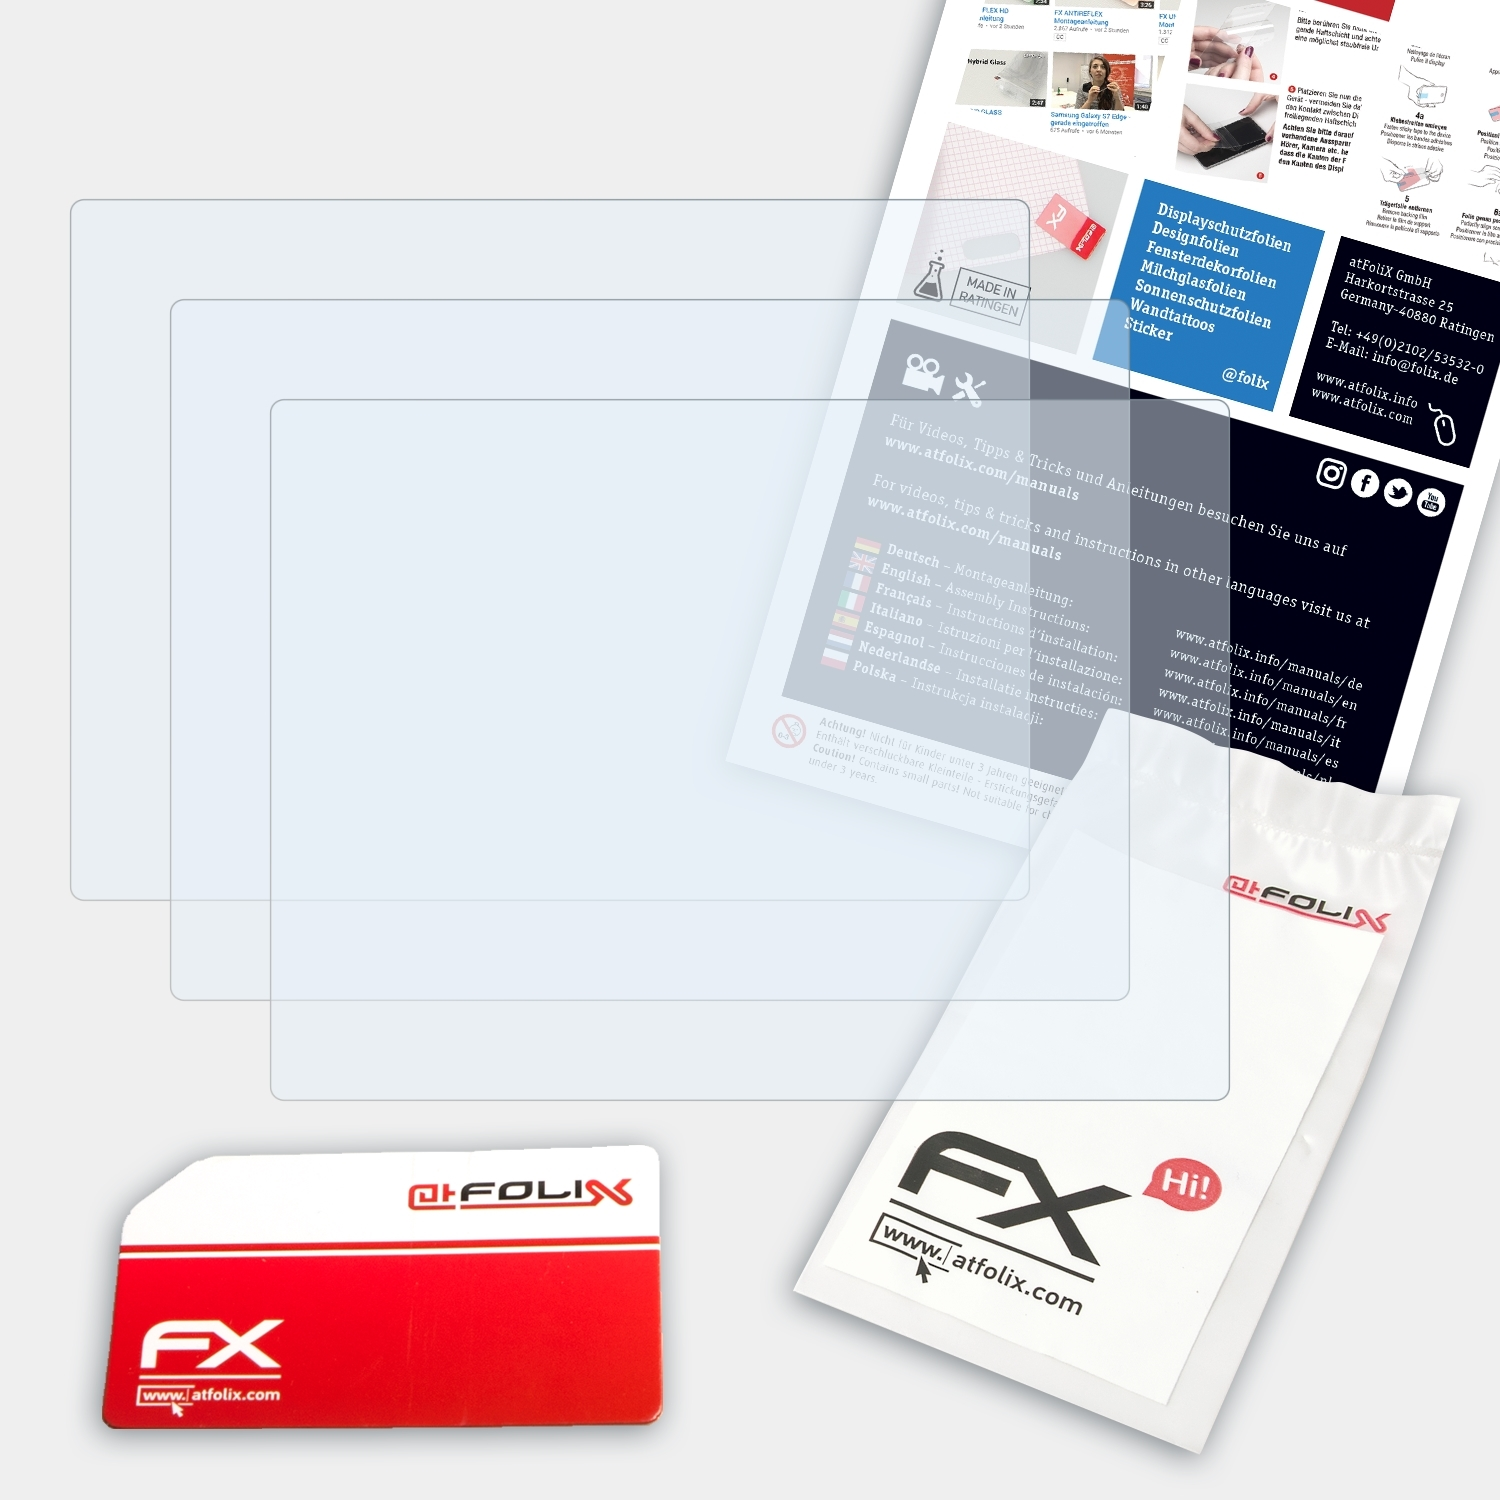 ATFOLIX 3x FX-Clear (ILCE-9)) a9 Displayschutz(für Sony Alpha